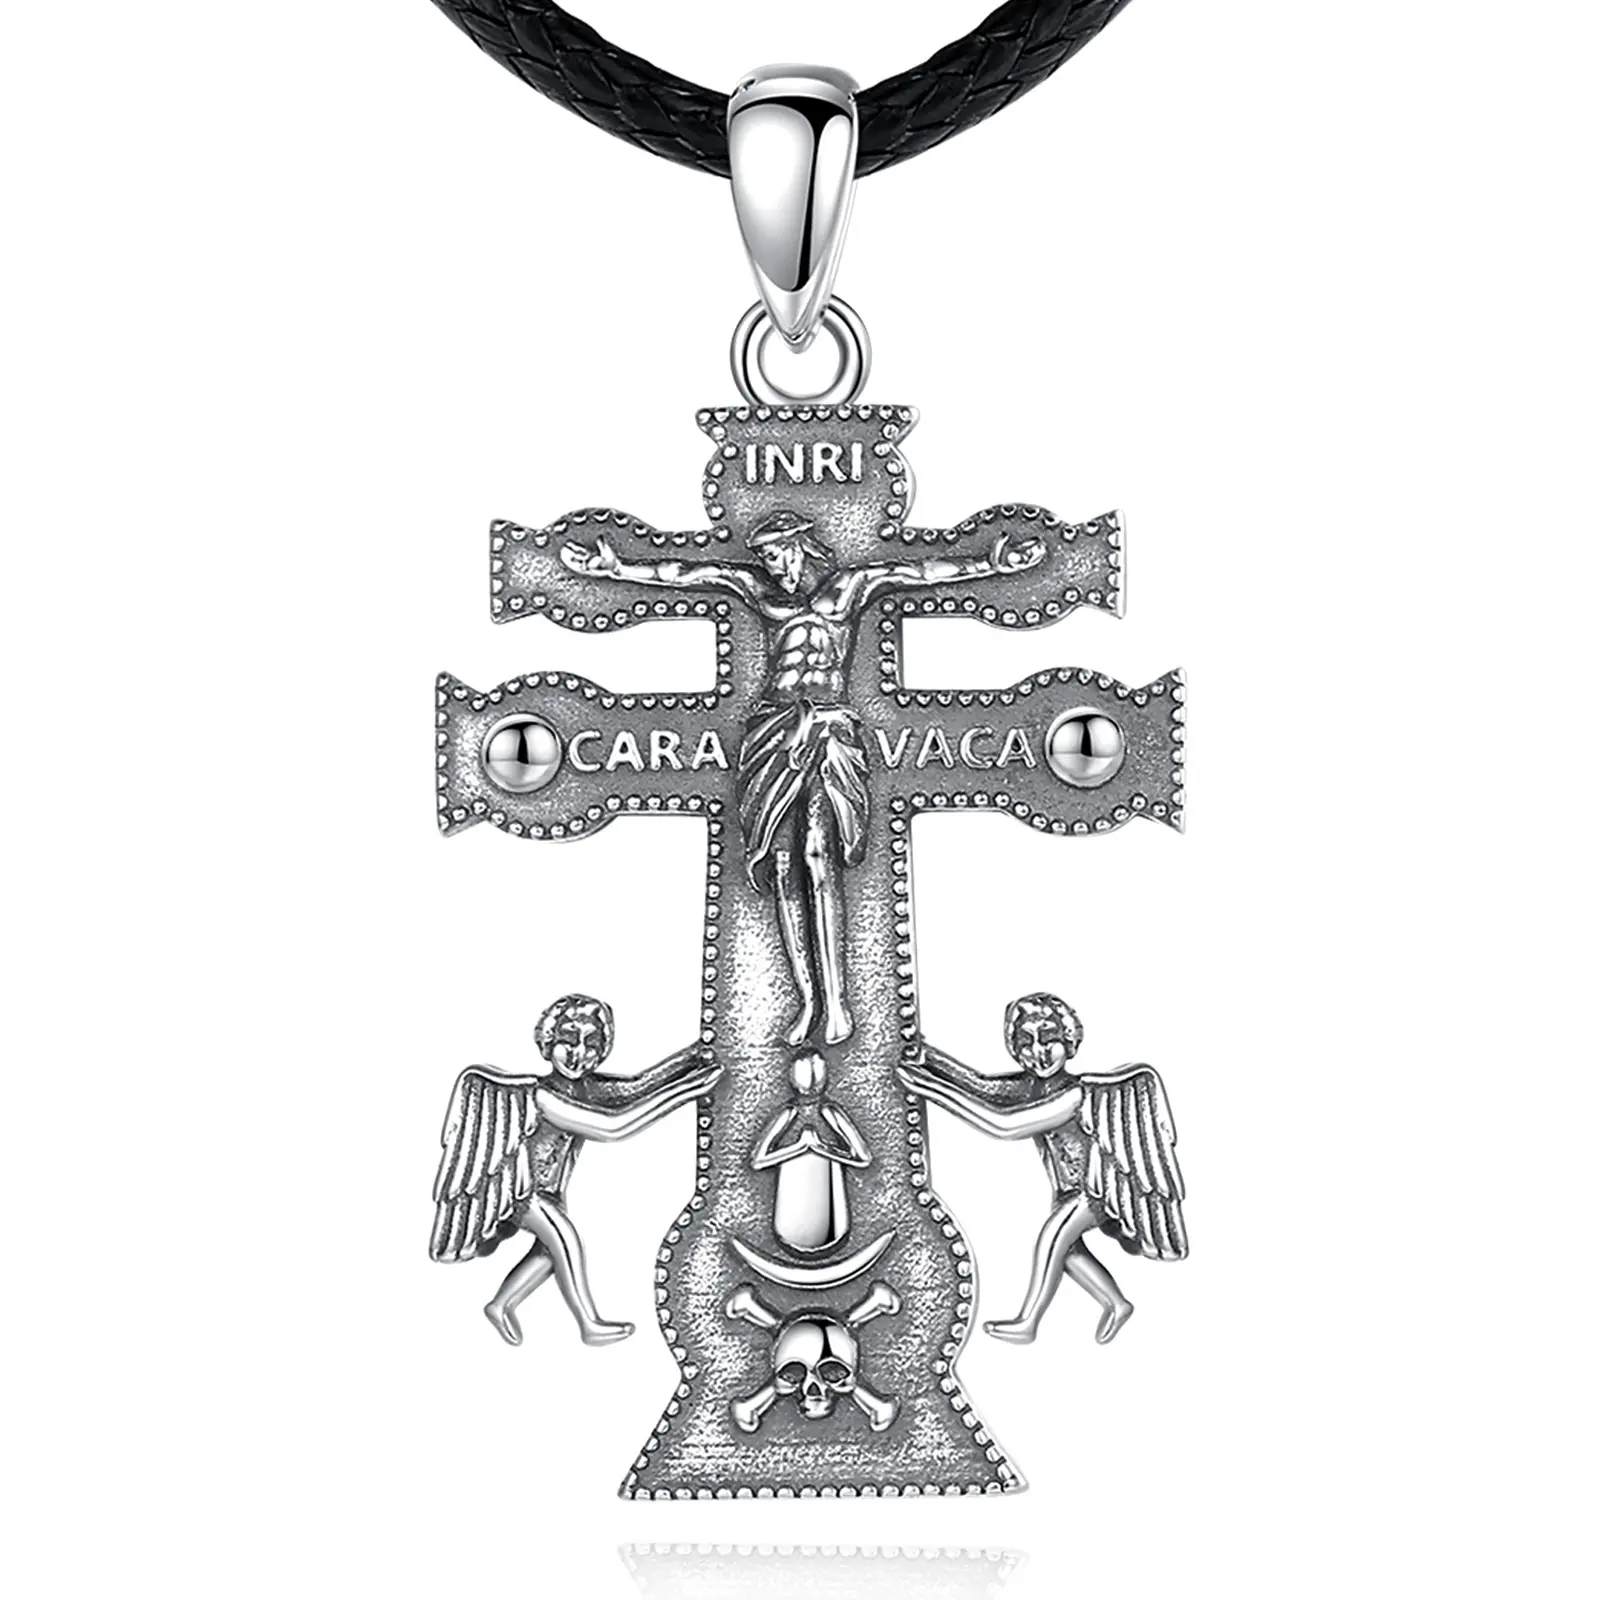 Merryshine 925 sterling silver faith gothic jewelry christian jesus crucifix caravaca cross pendant necklace